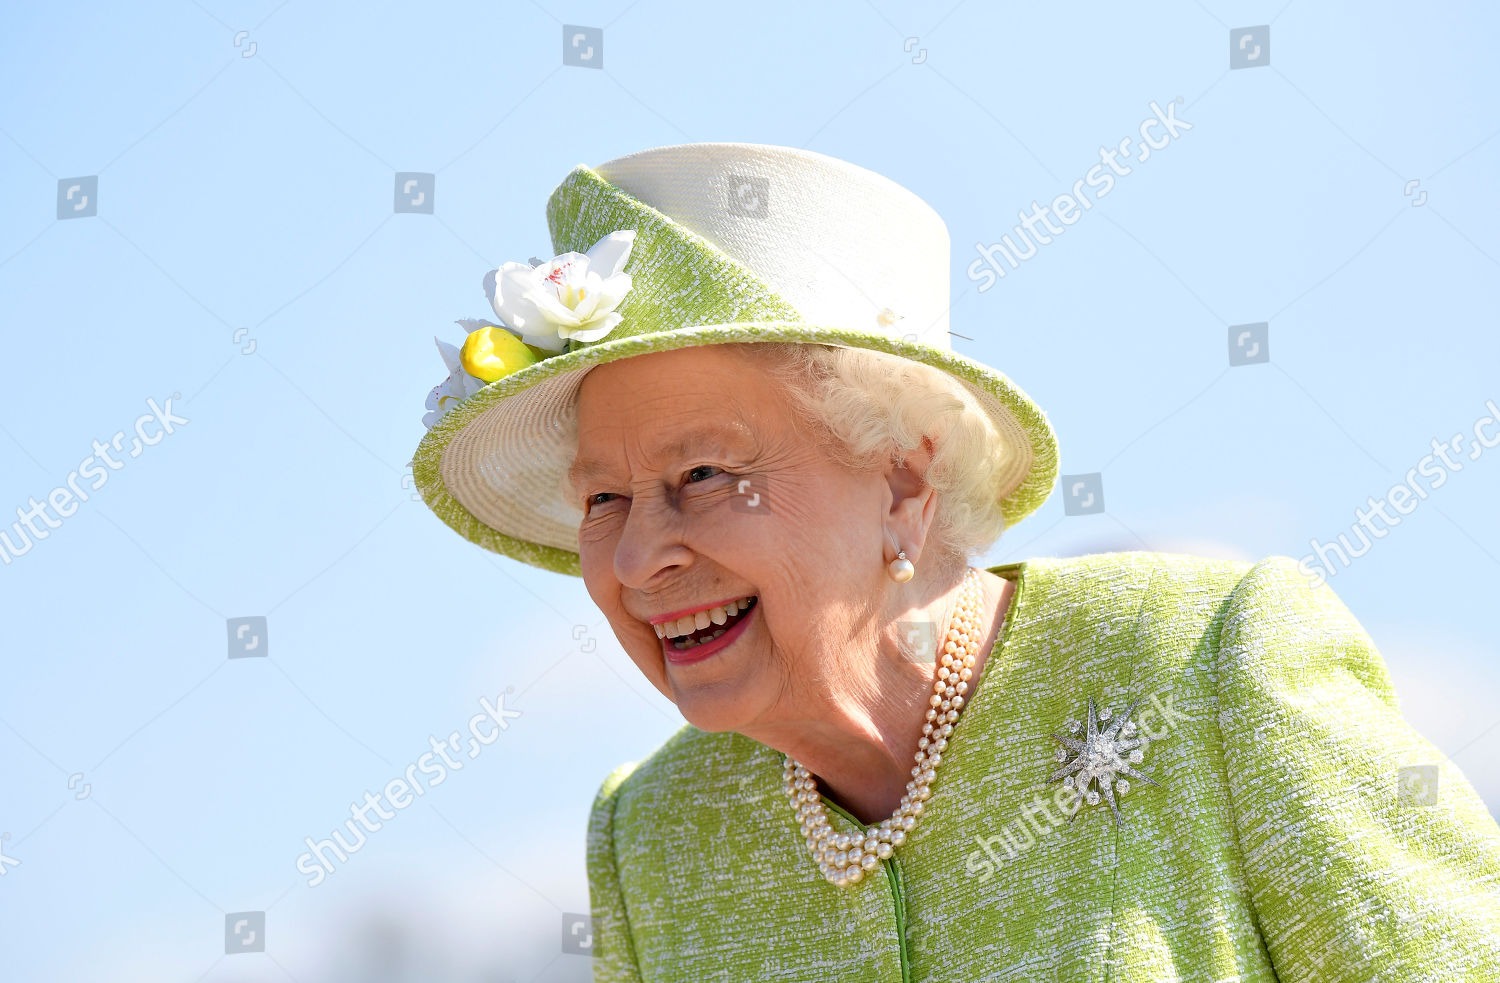 queen-elizabeth-visit-to-somerset-uk-shutterstock-editorial-10180760a.jpg